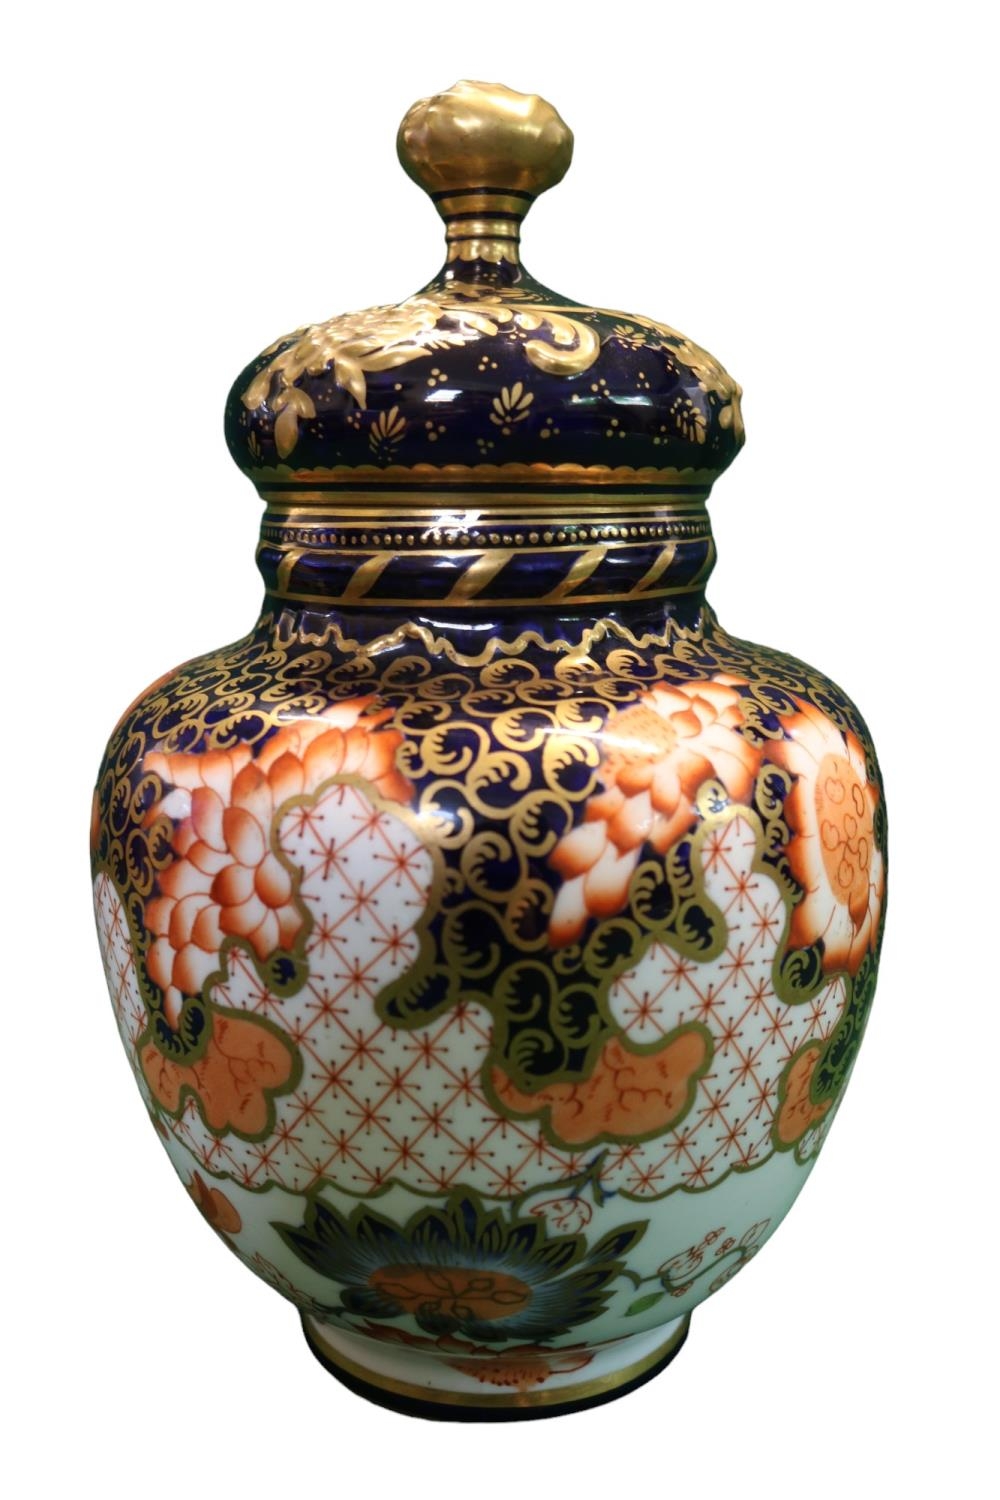 Royal Crown Derby late 19th century Cobalt Blue and Gilt large Imari pattern lidded urn style vase